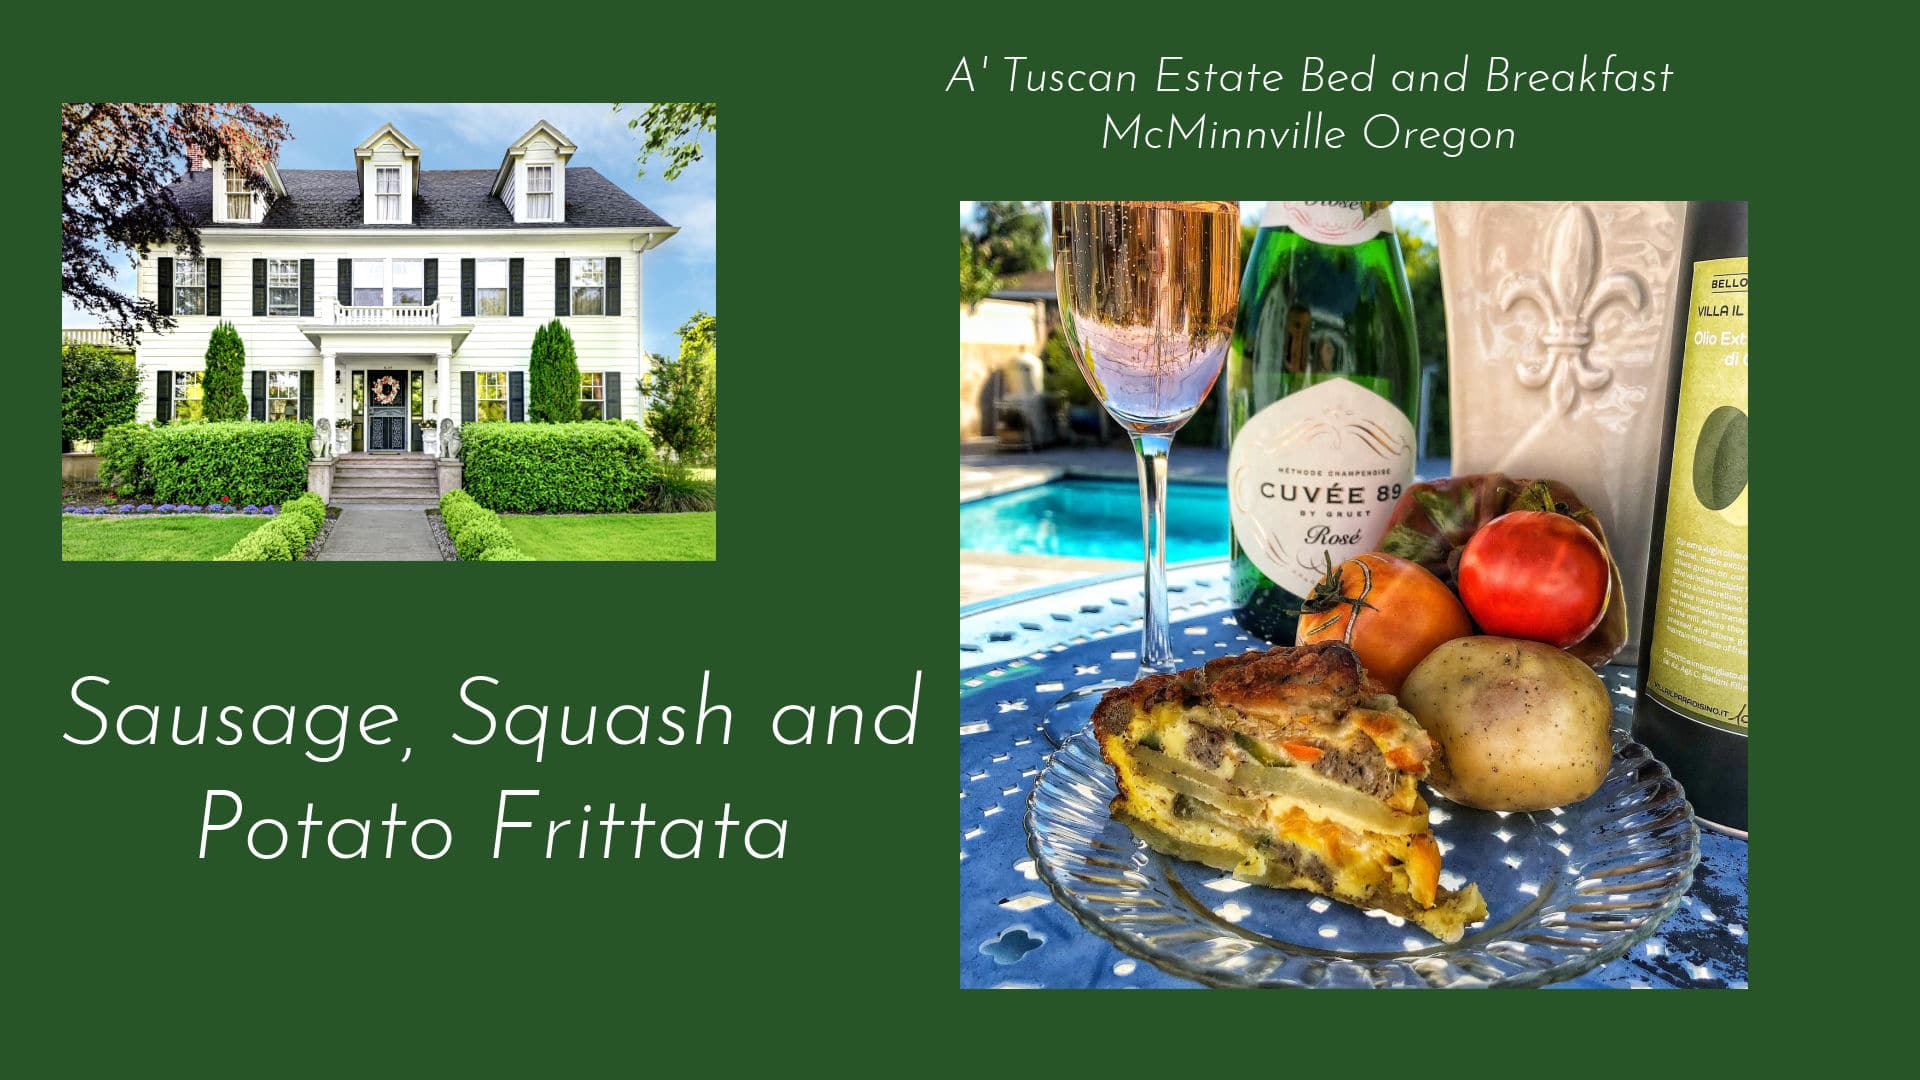 Sausage, Squash and Potato Frittata at A'Tuscan Estate